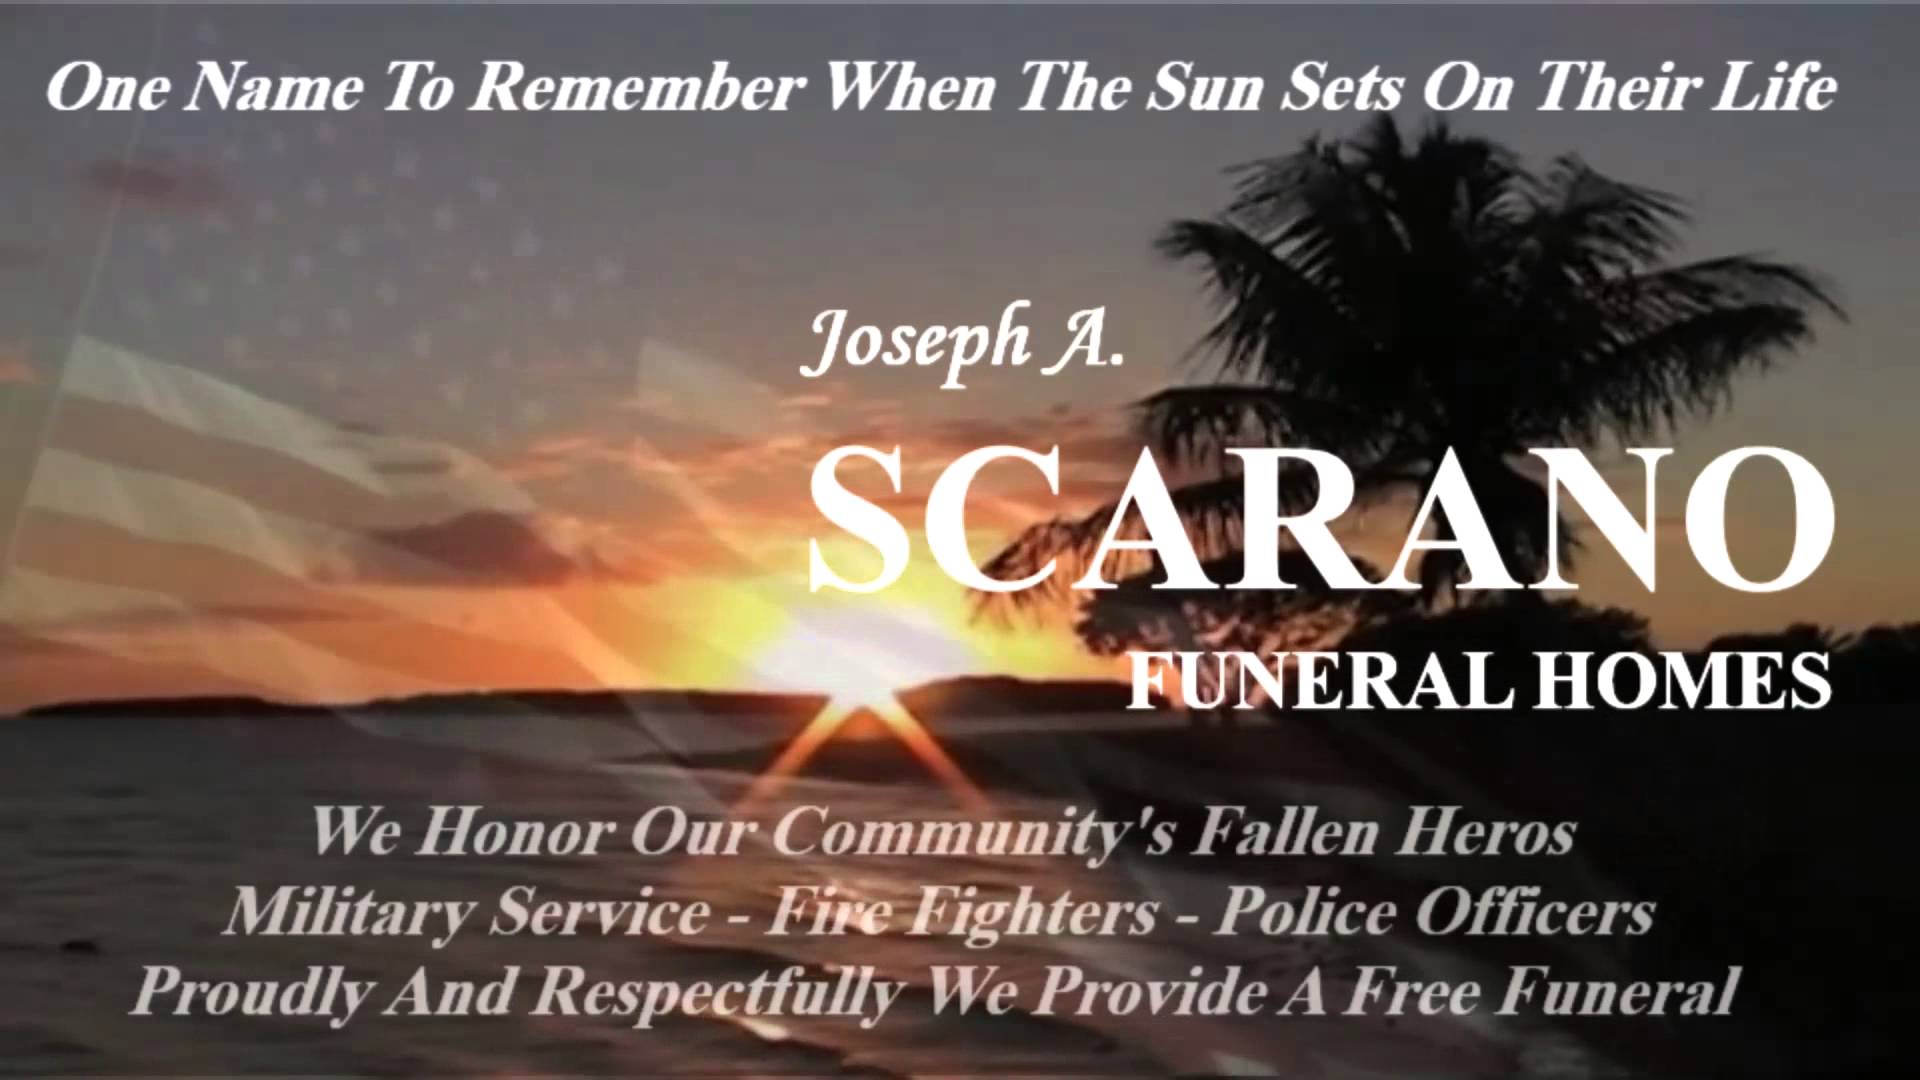 Joseph A. Scarano Funeral Homes